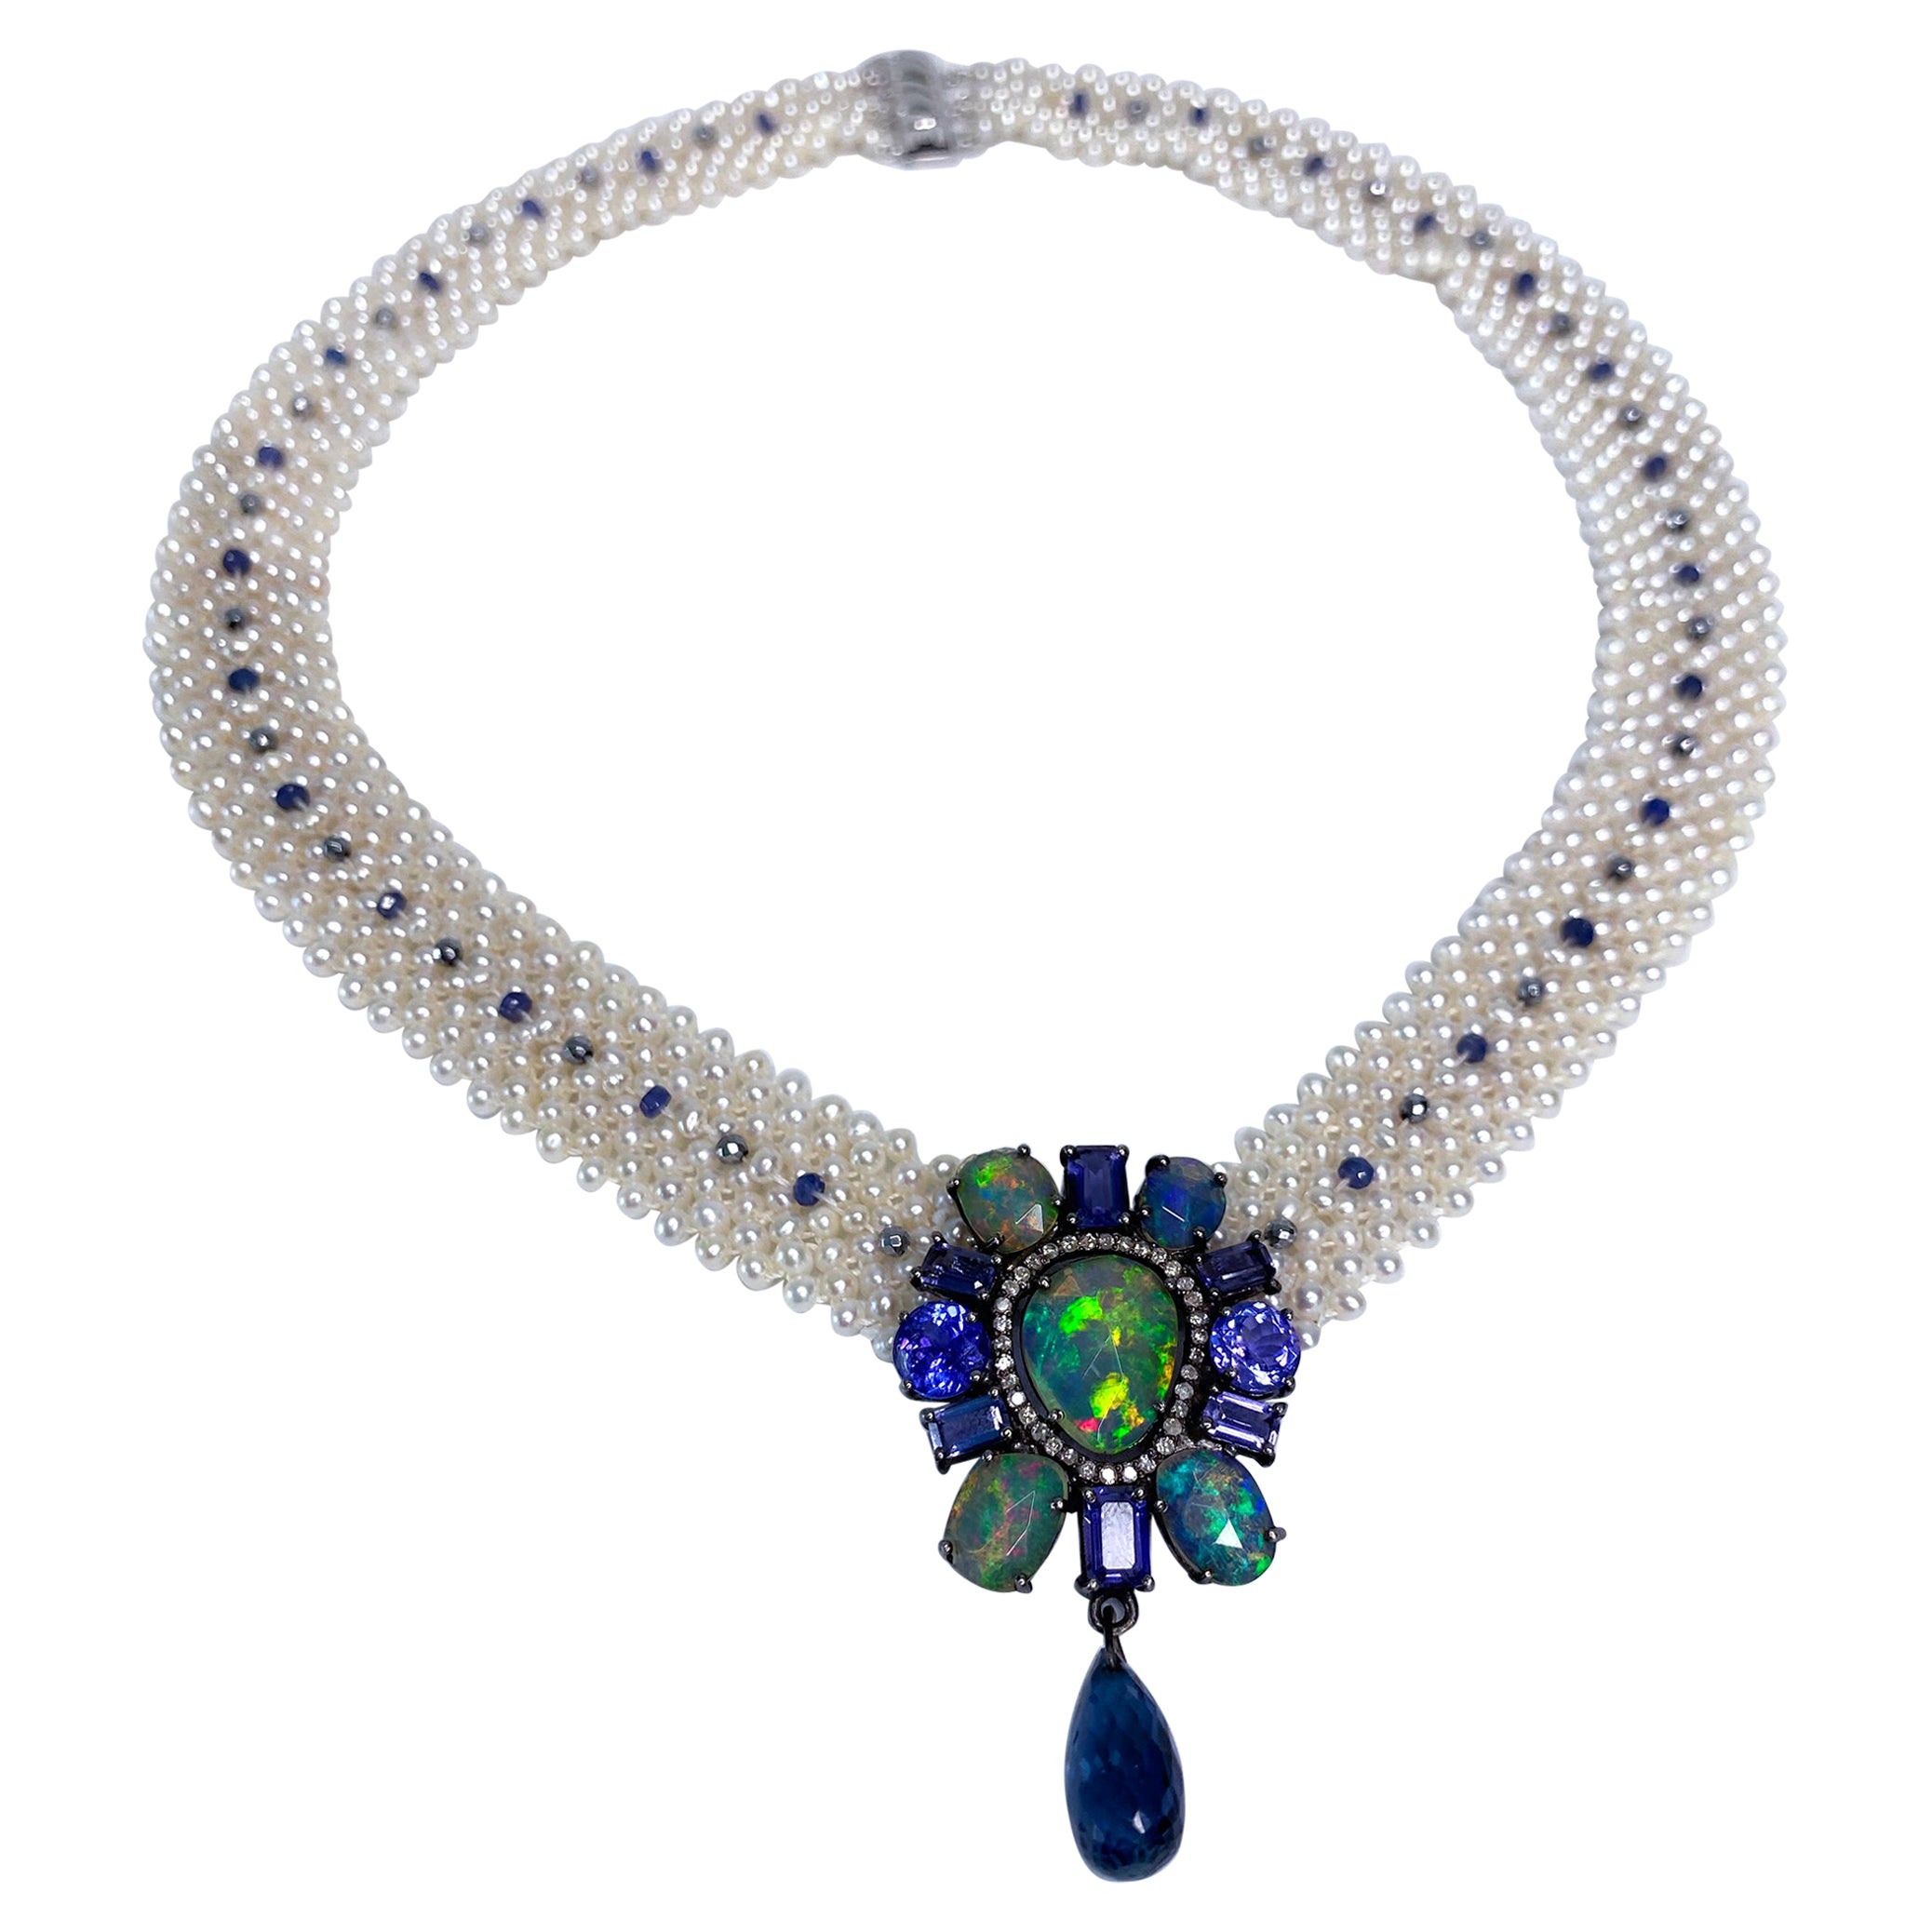 Marina J. Pearl Lace Necklace with Fire Opal, Tanzanite & Diamond Centerpiece